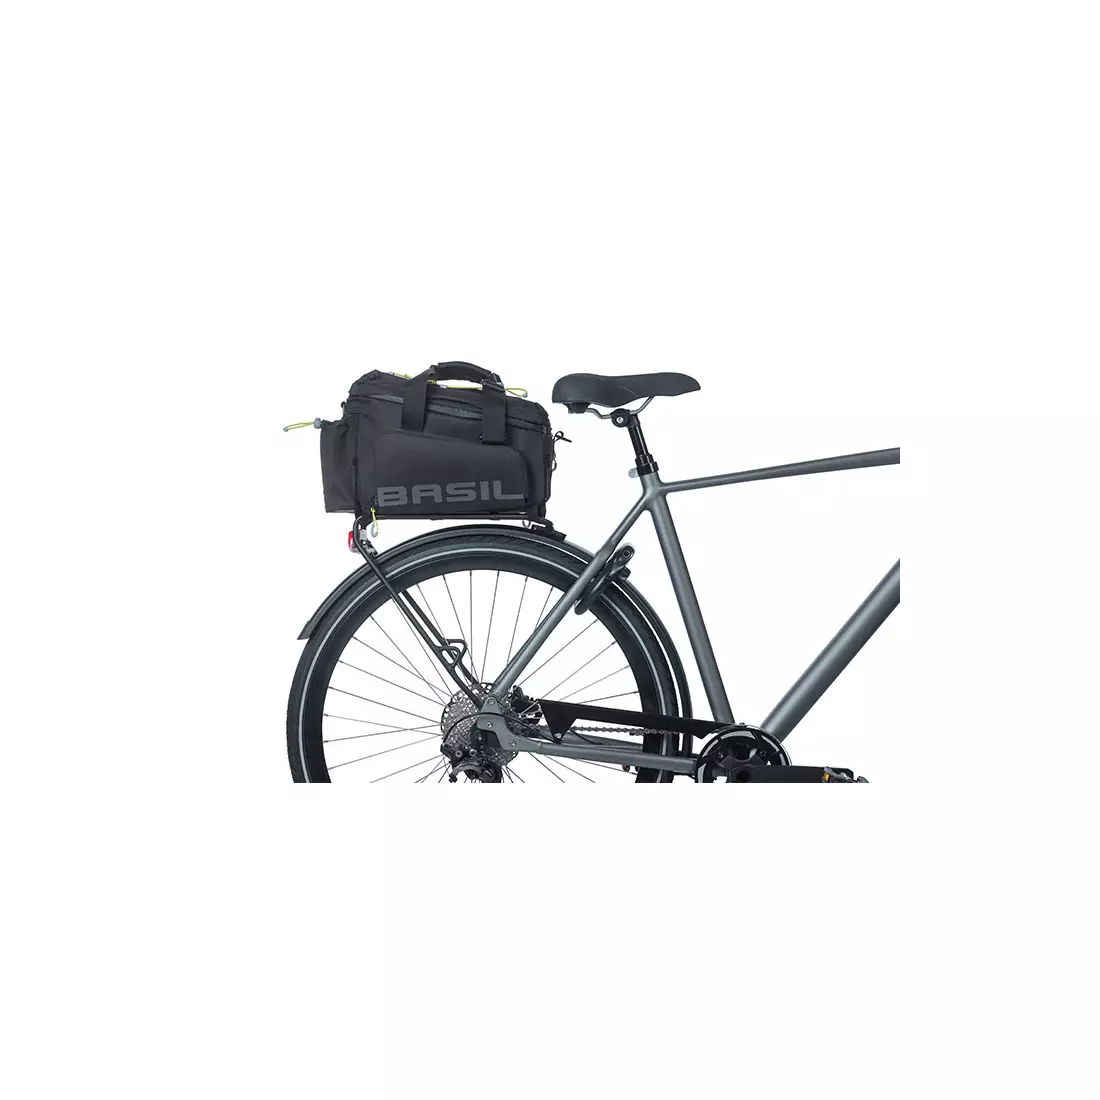 BASIL Bicycle pannier, for the trunk TRUNKBAG XL Pro, 9-36L, black lime 18295